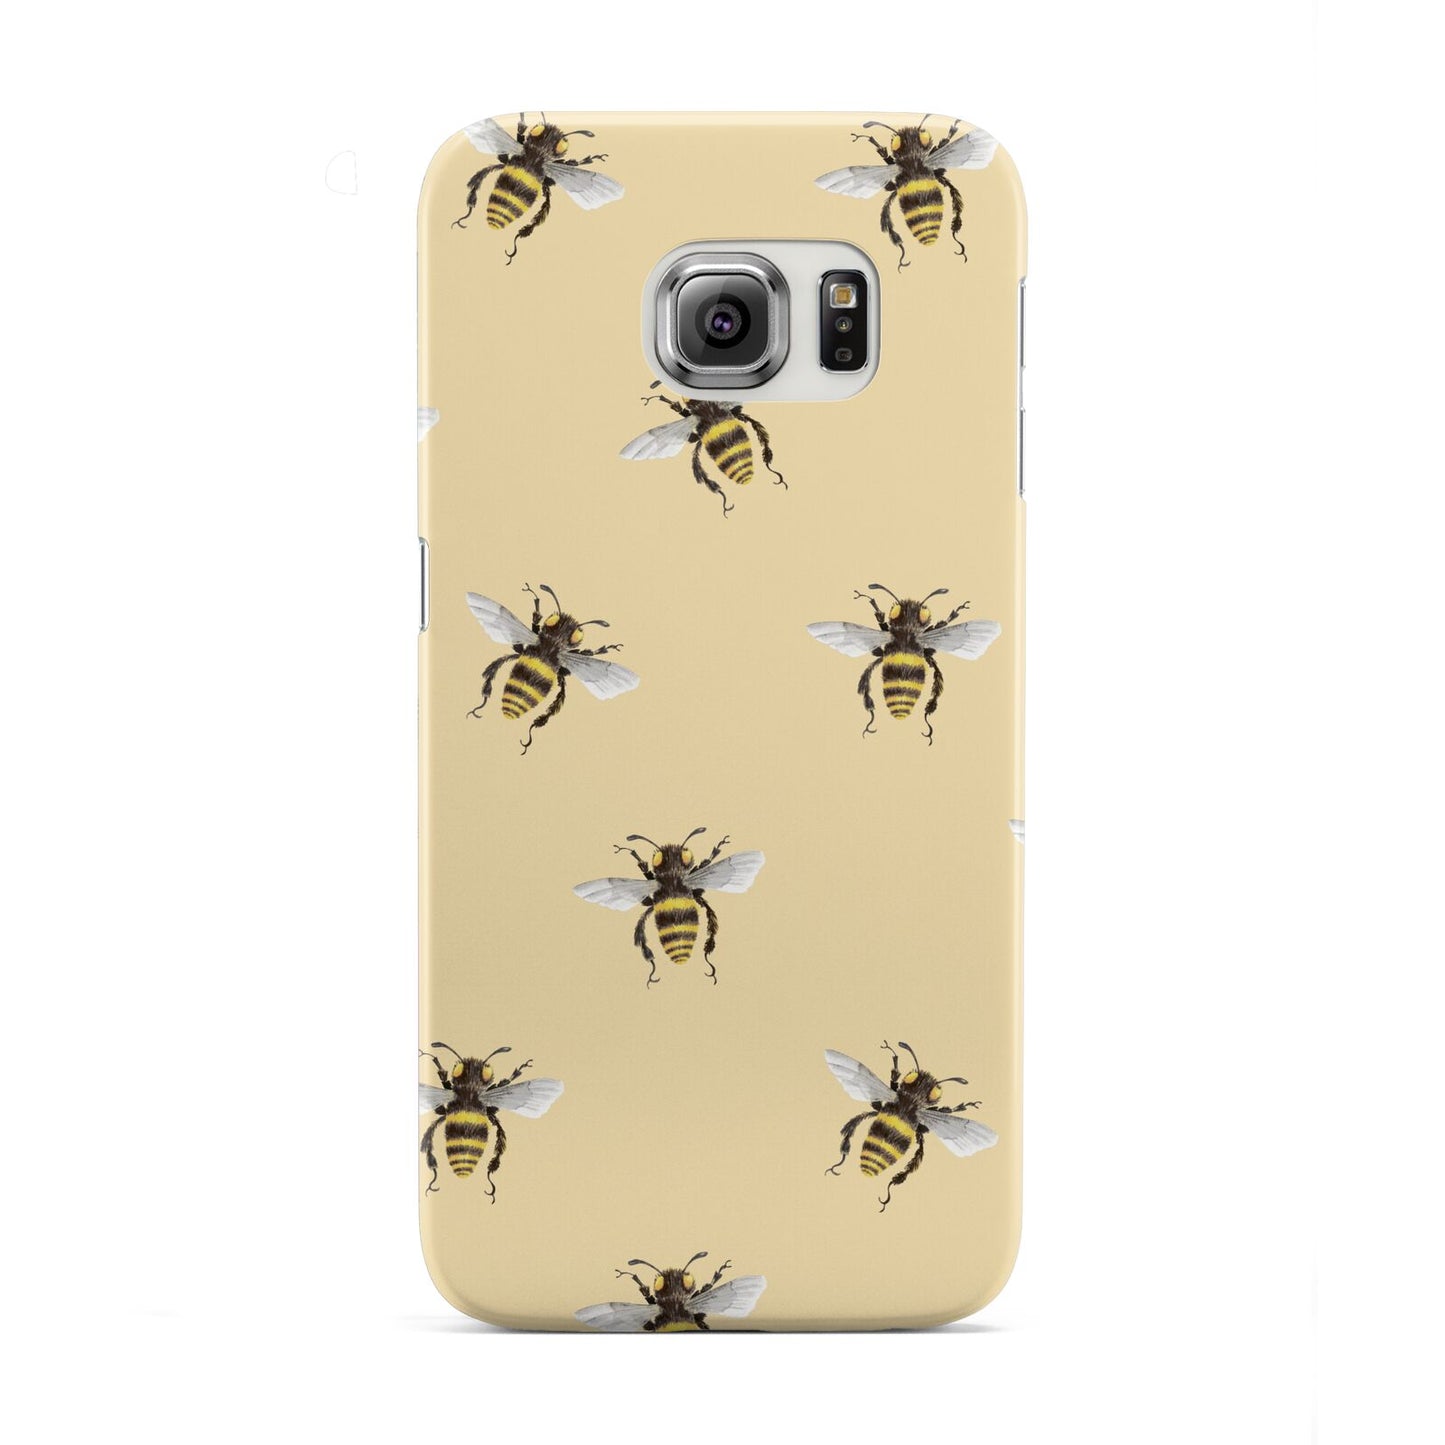 Bee Illustrations Samsung Galaxy S6 Edge Case